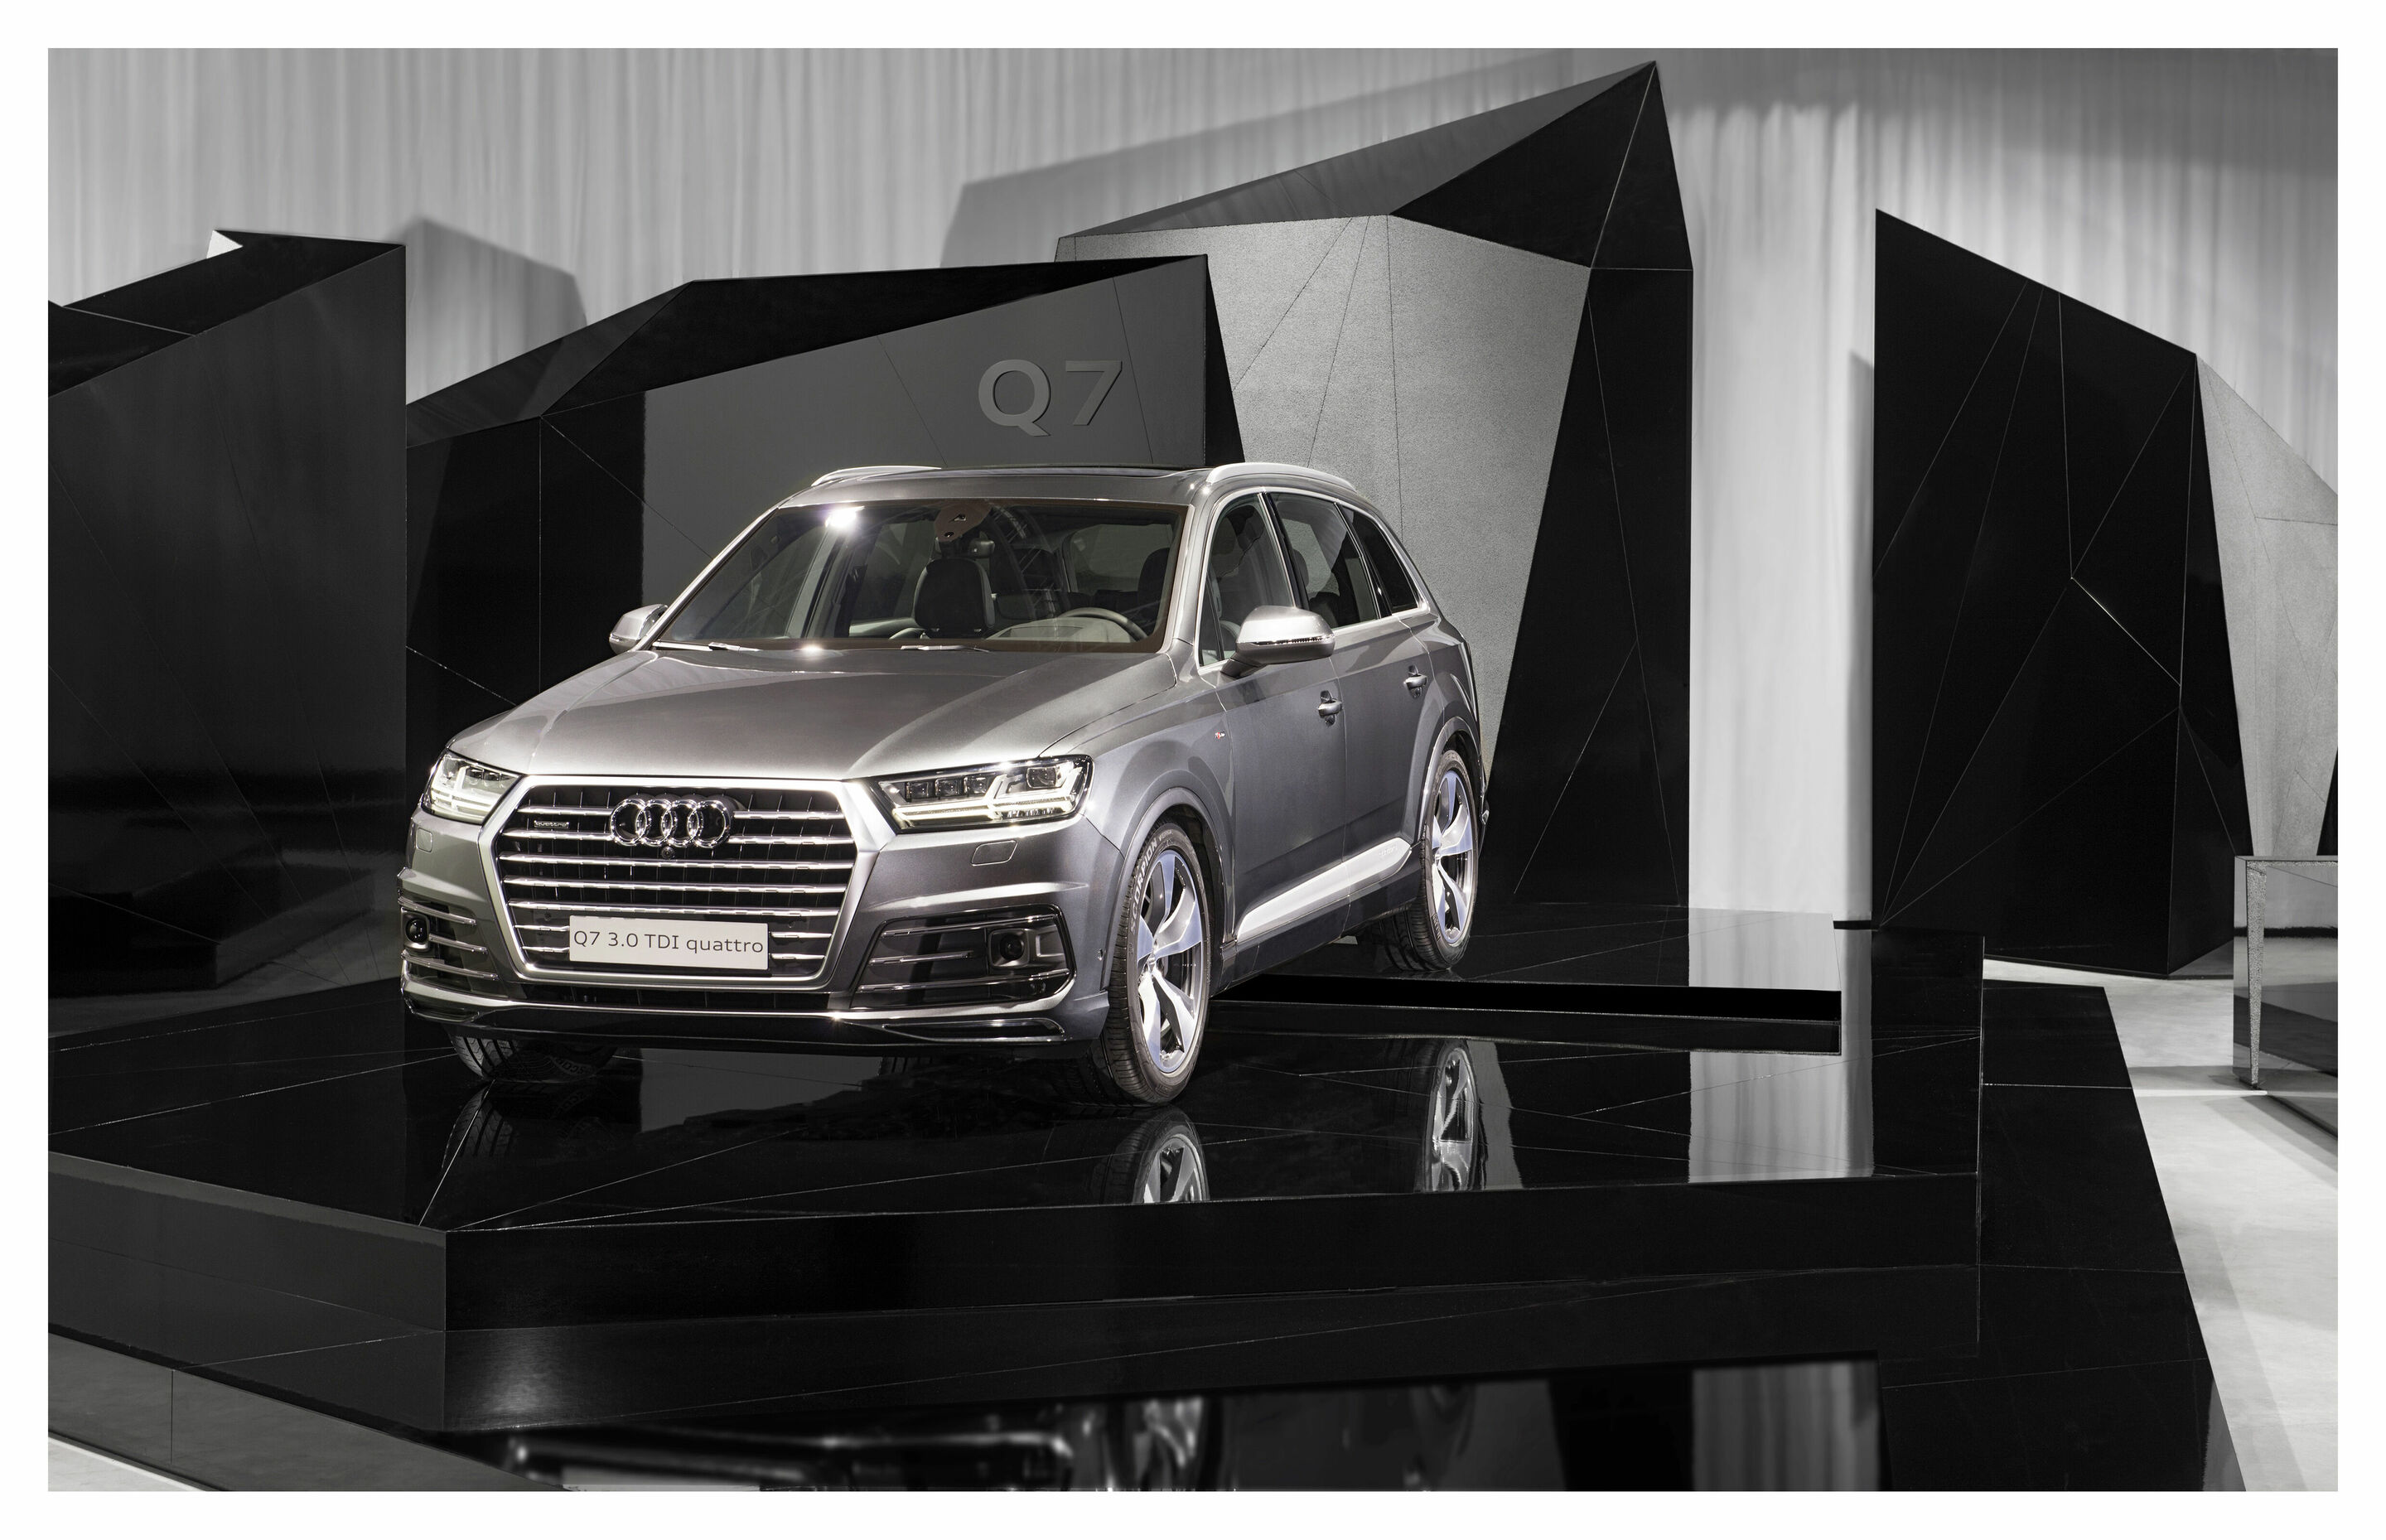 “The great quattro” by Audi at Design Miami/Basel